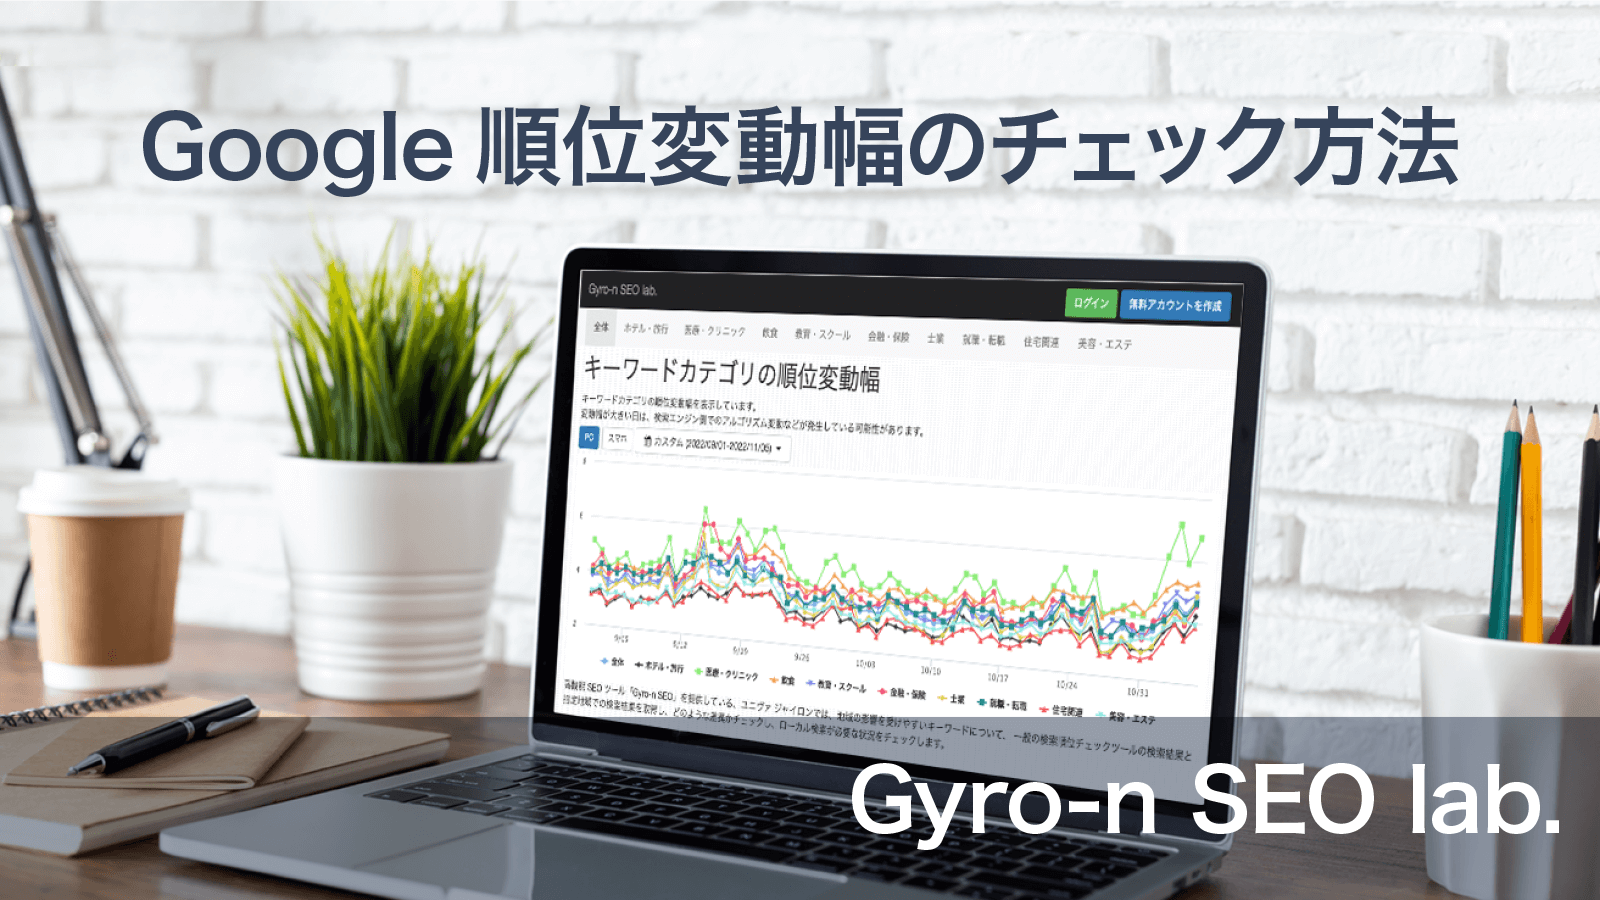 Google順位変動、検索地域別・キーワード別に変動をチェック「Gyro-n SEO lab.」